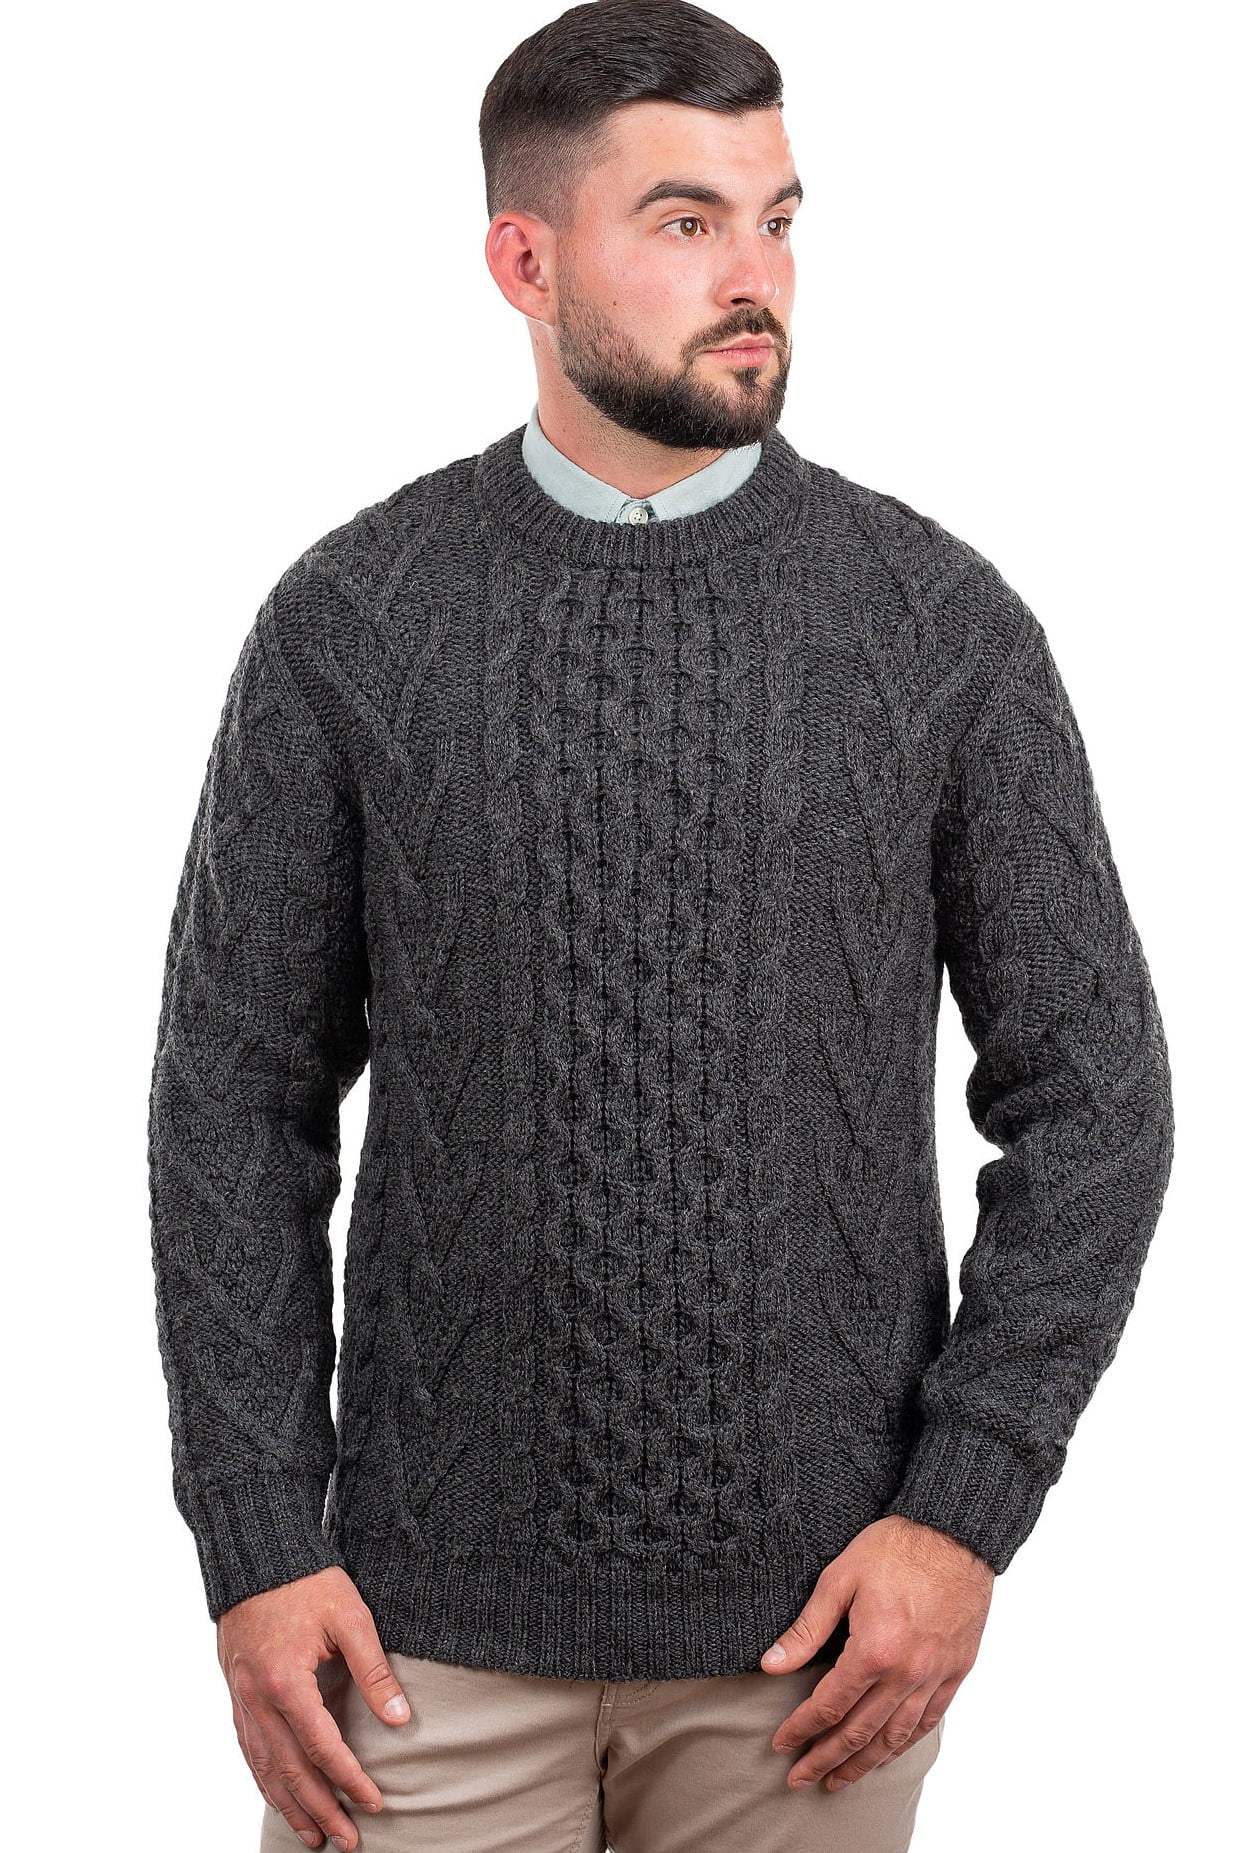 SAOL 100% Merino Wool Men's Aran Cable Knit Irish Sweater